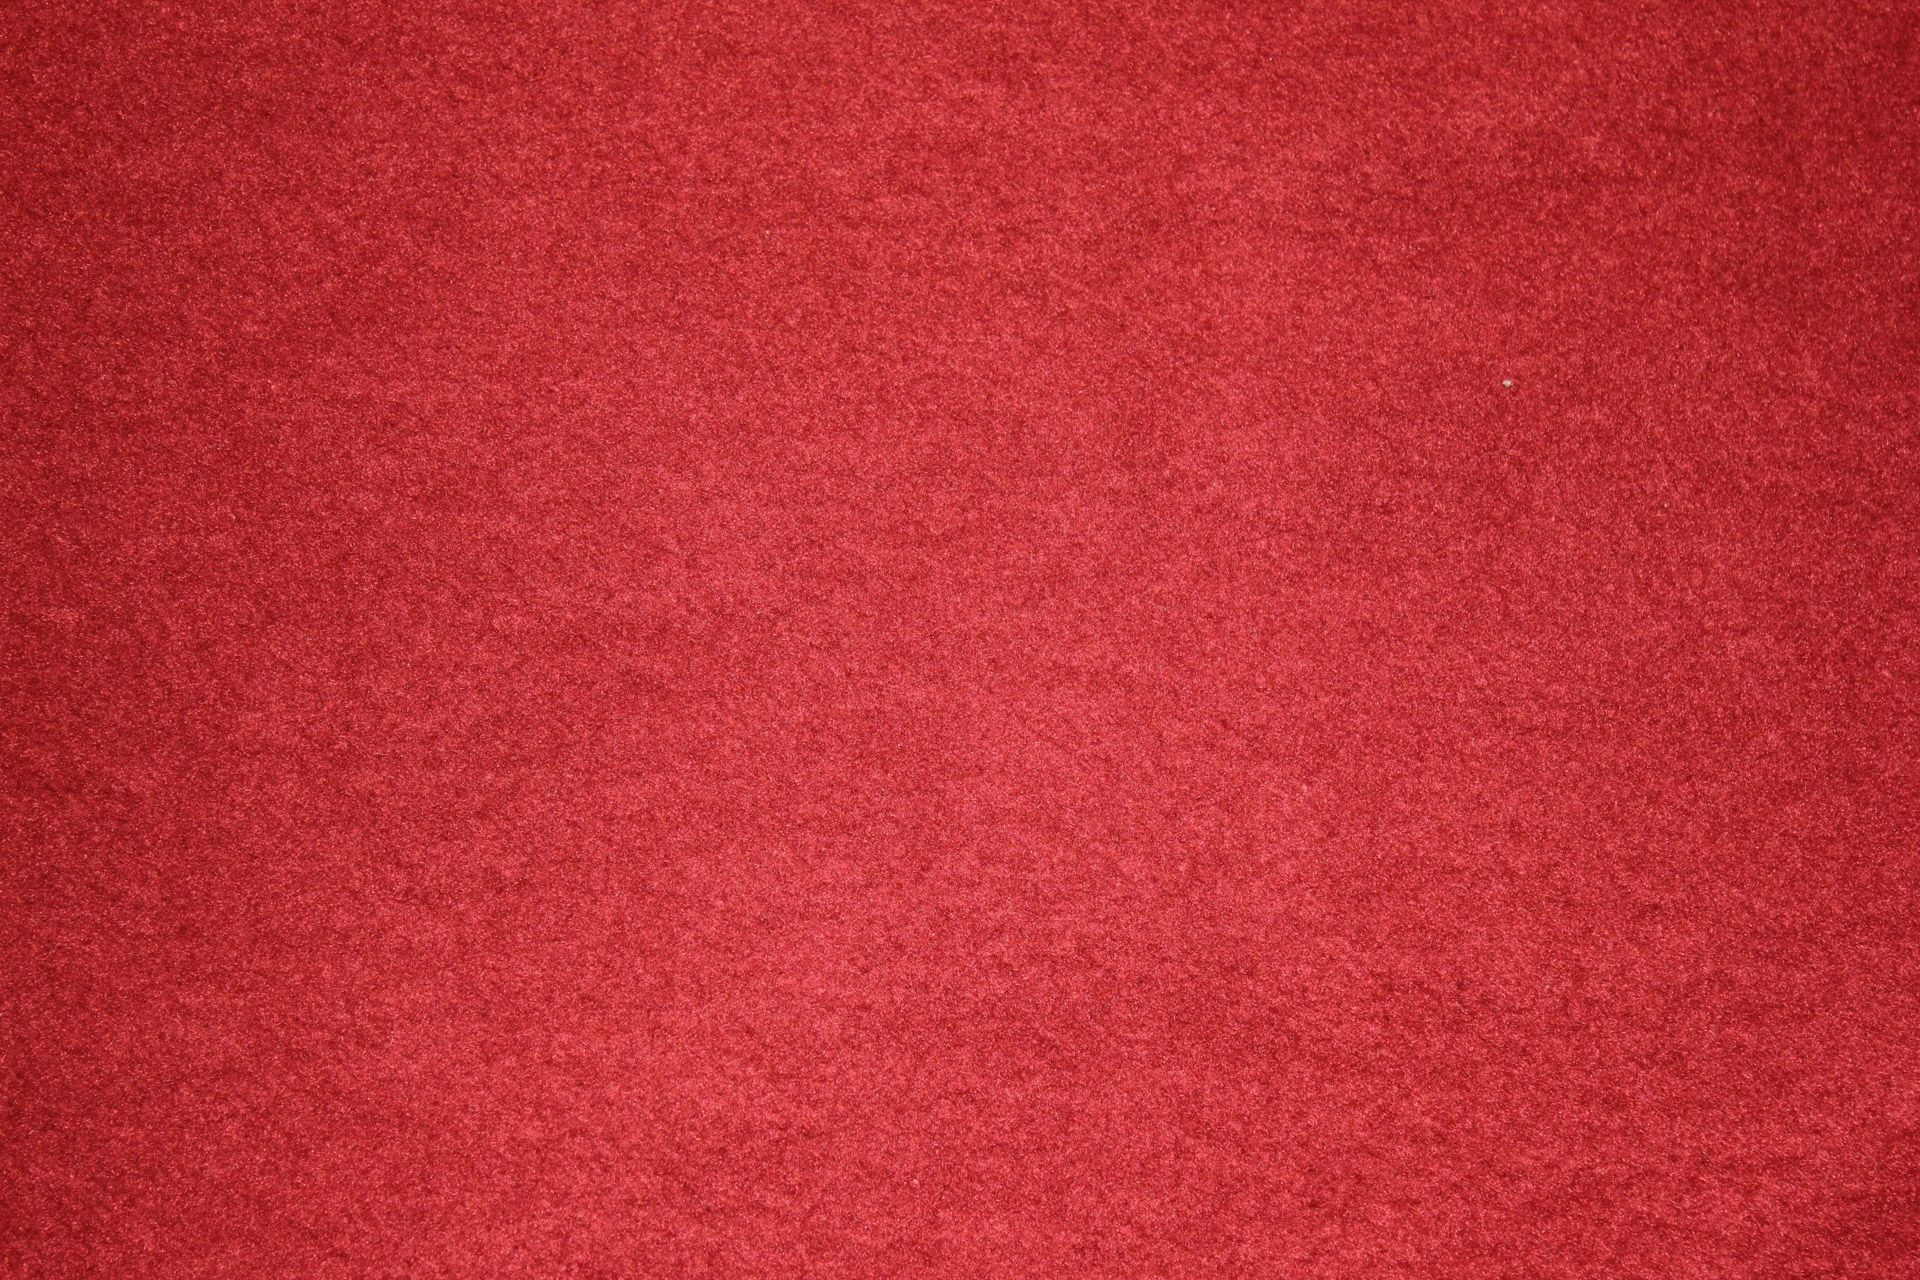 1920x1280 smooth red texture | Tela, Pisos rojos, Pa&Atilde;&plusmn;